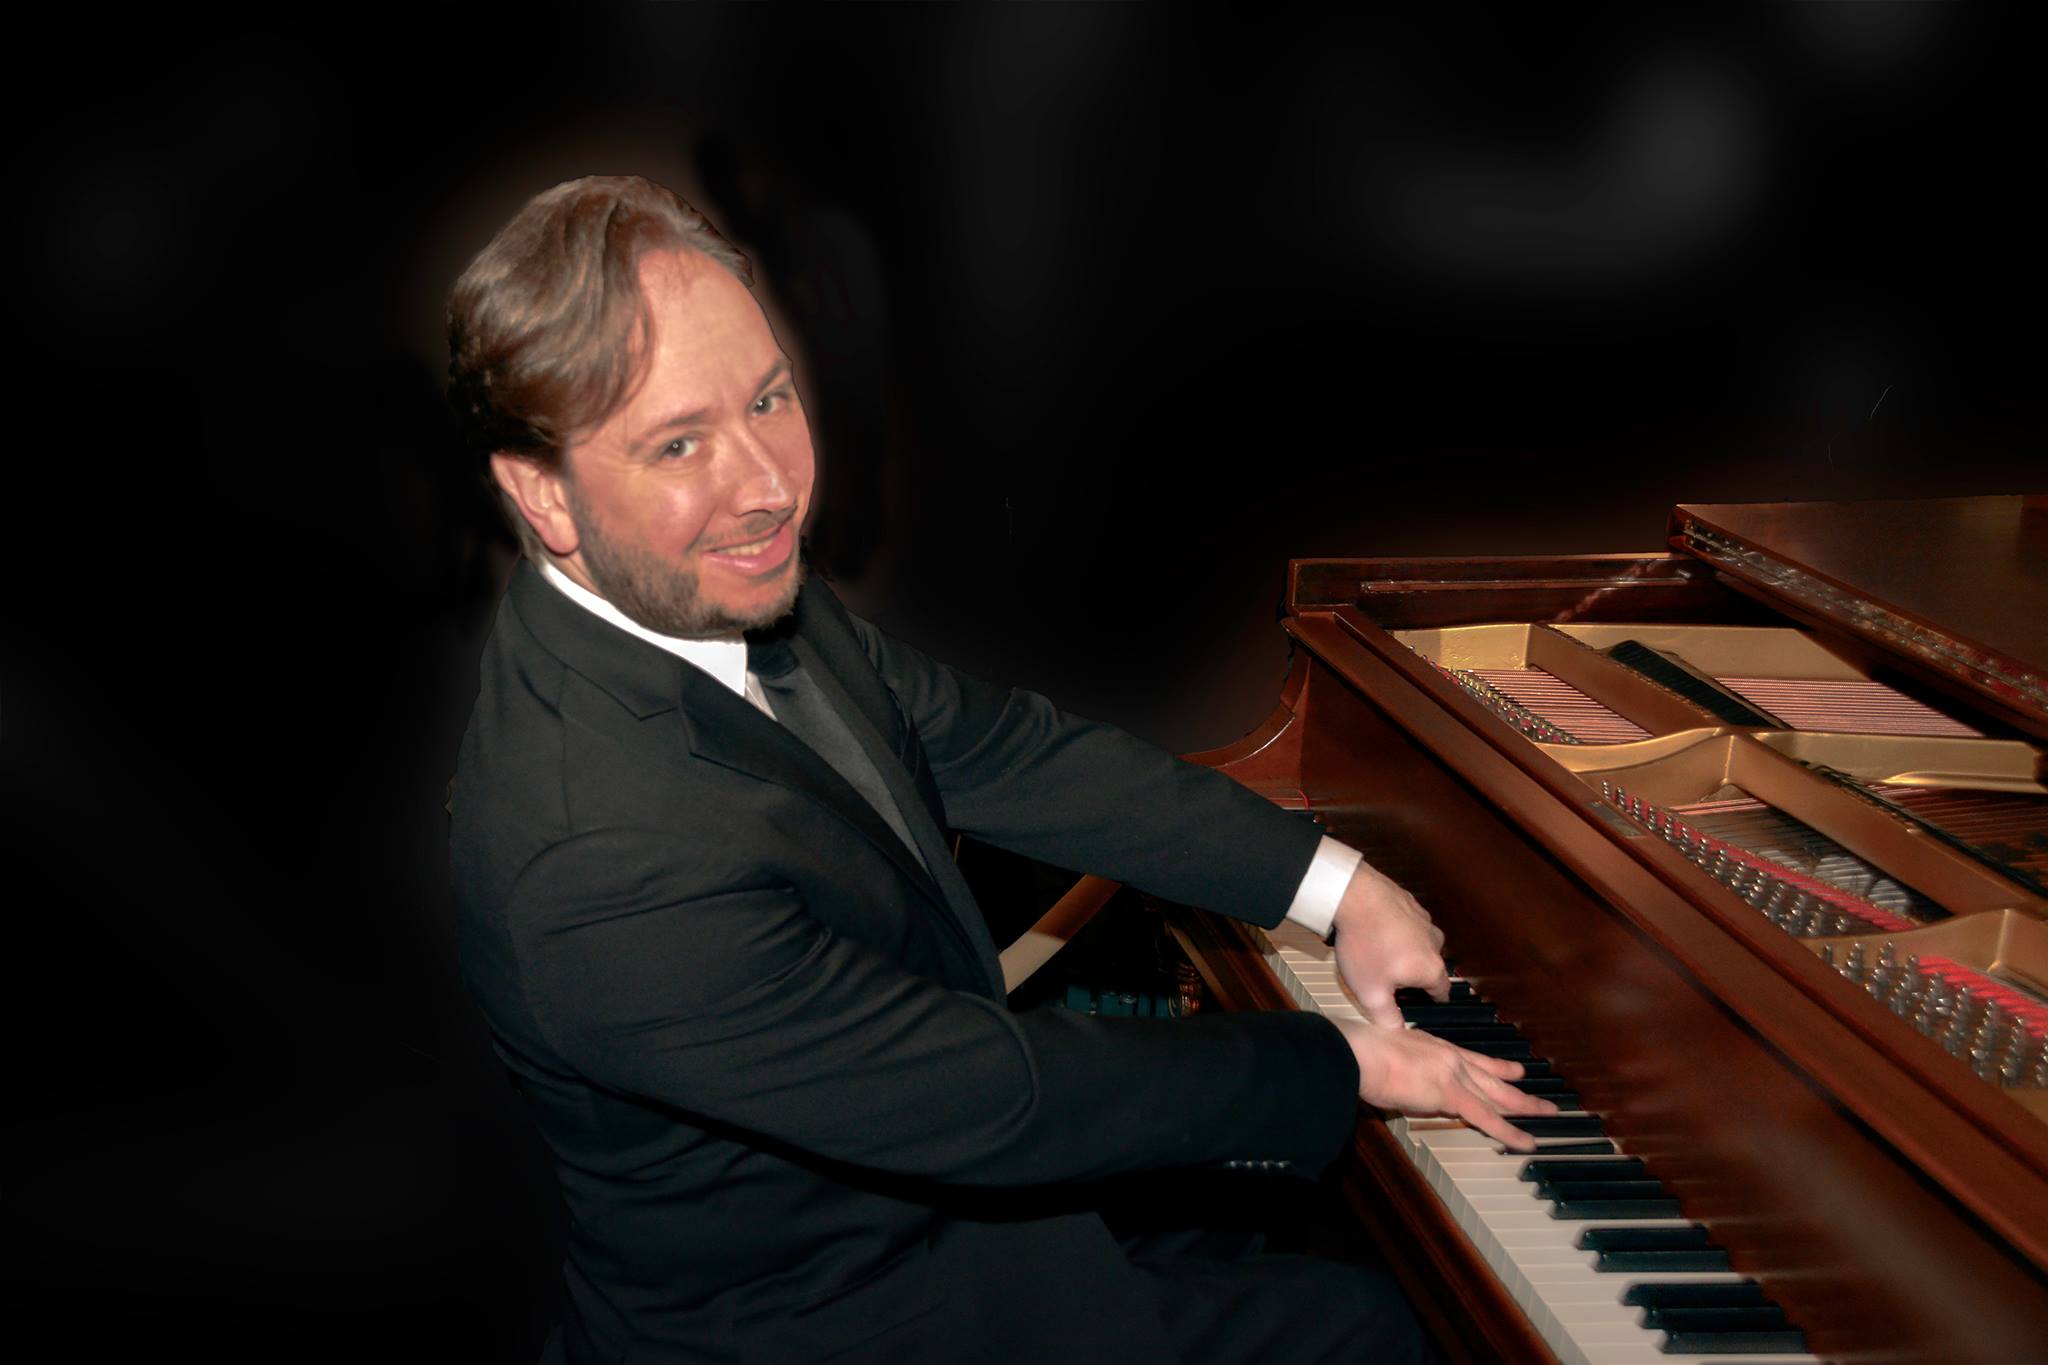 Impromptu Classical Concerts 44th Season Opens with Pianist Thomas Pandolfi